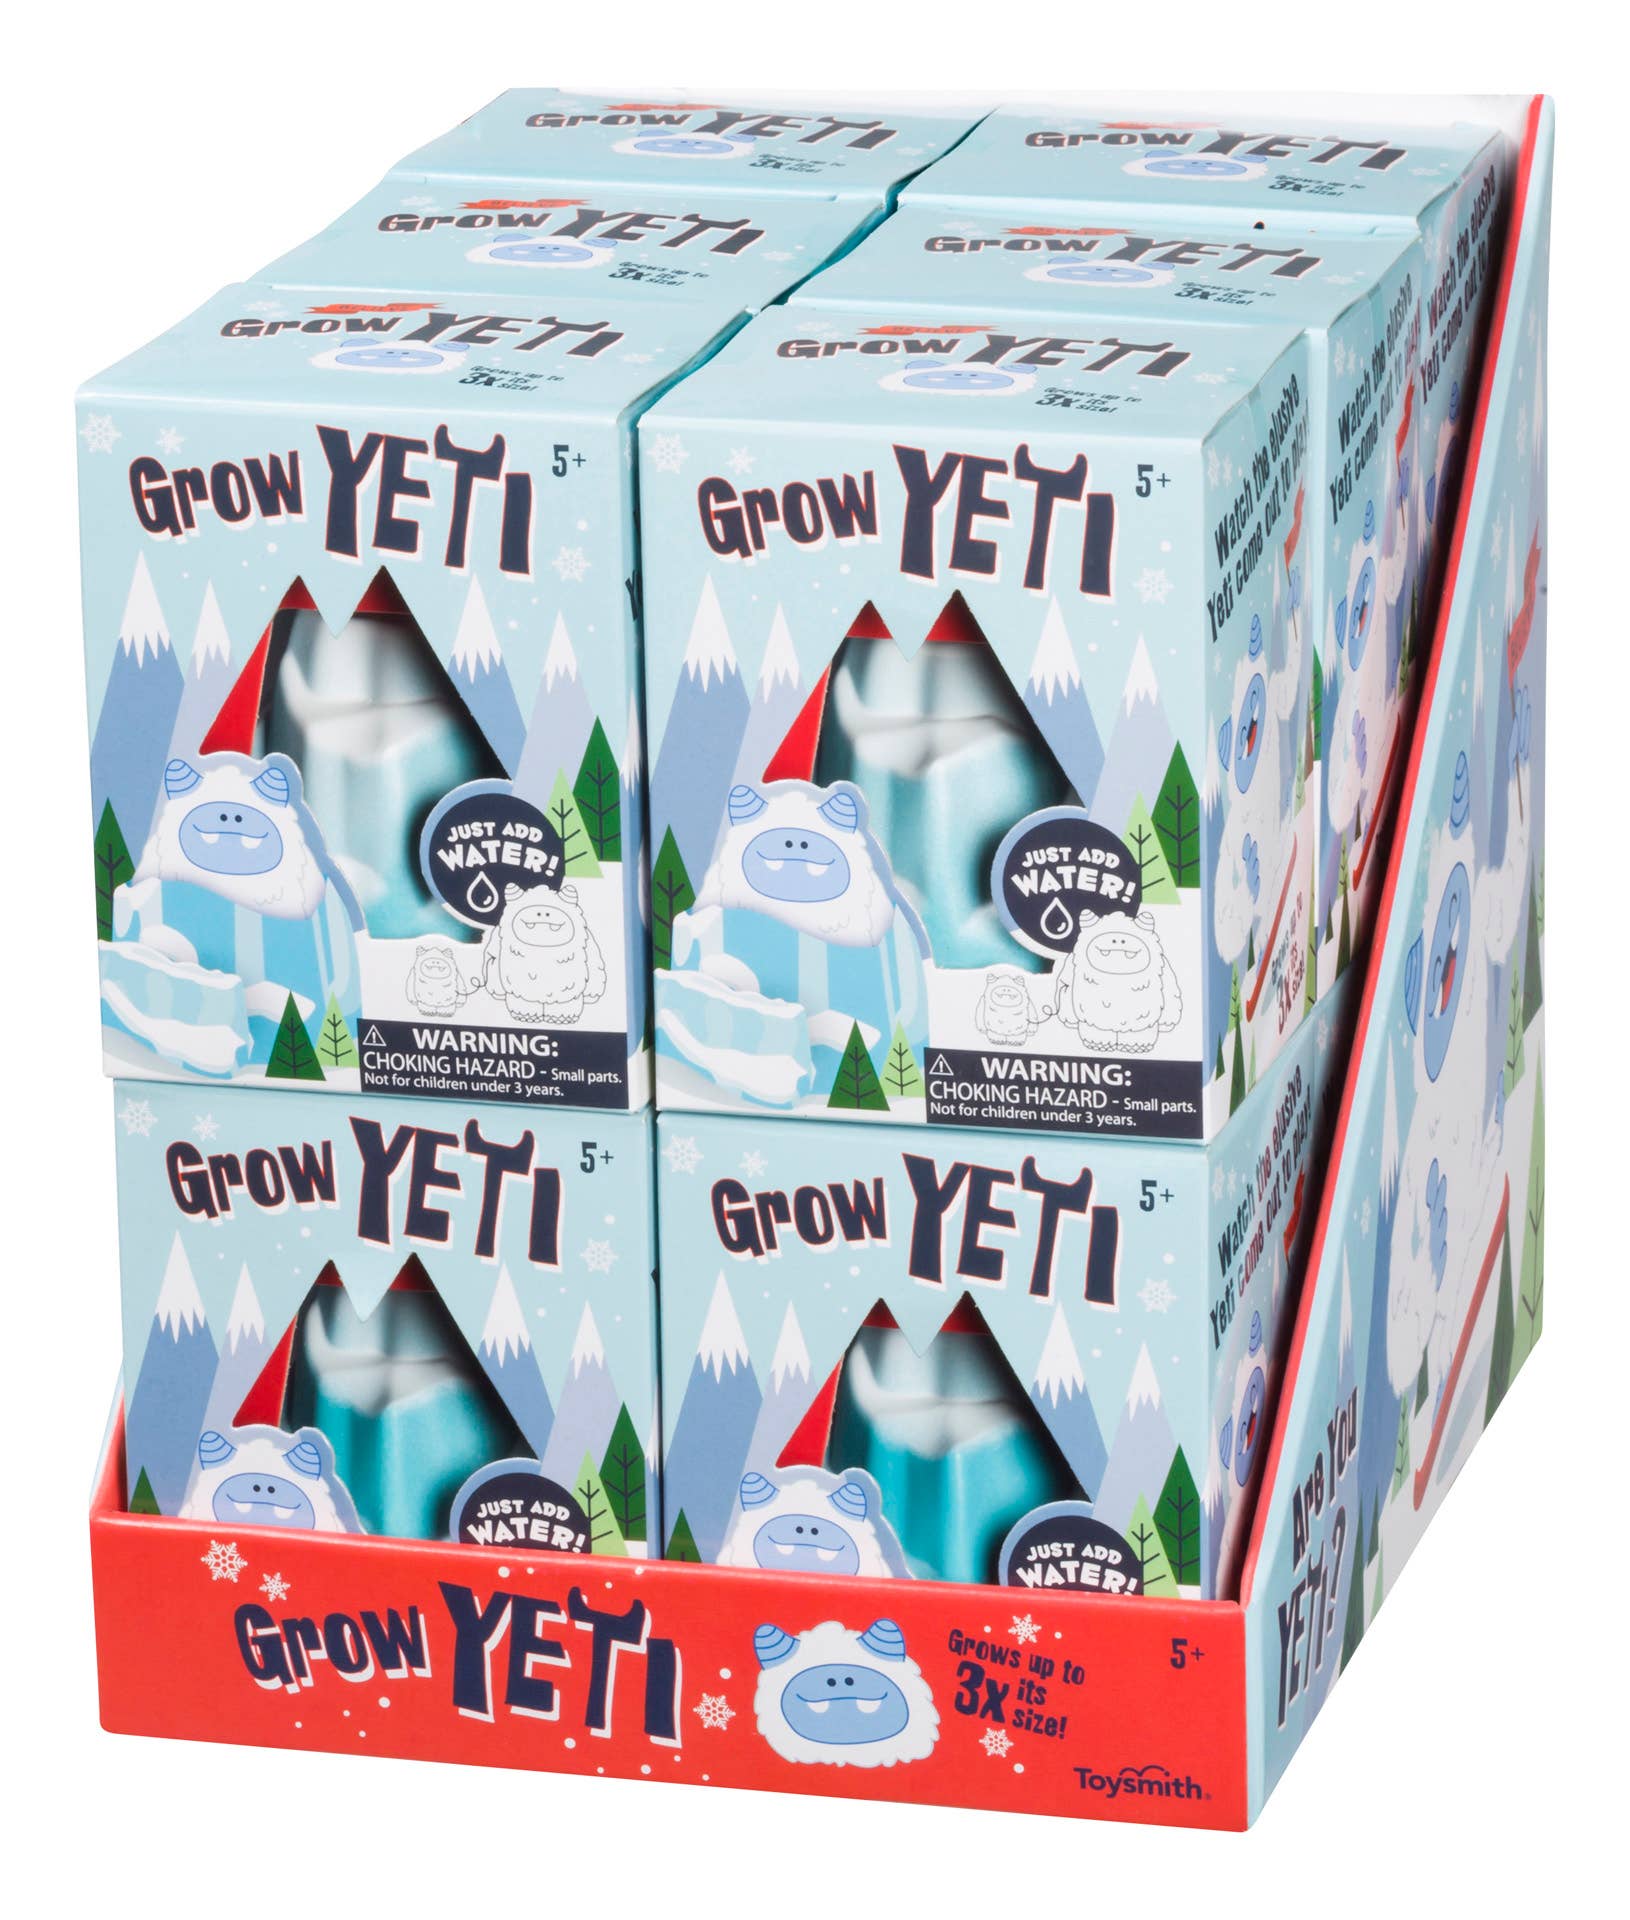 Toysmith - Toysmith Hatchin' Grow Yeti, Just Add Water, Fun Diy Kit